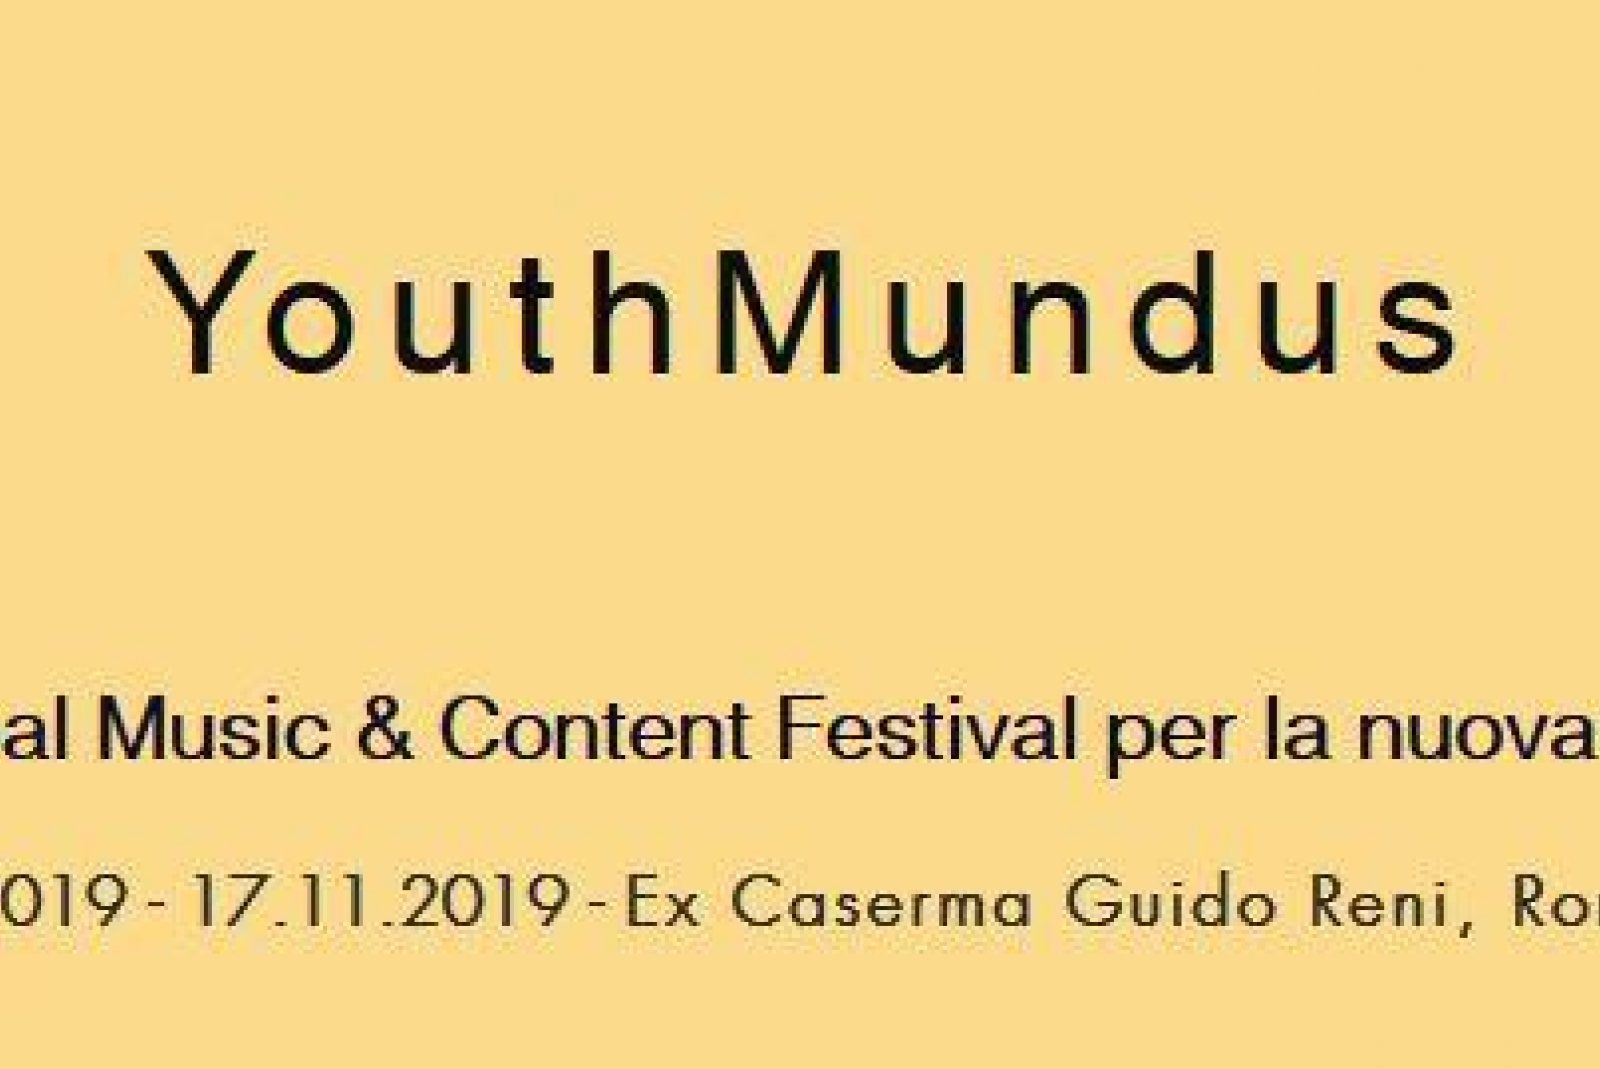 Youth Mundus, 14-17 Novembre 2019